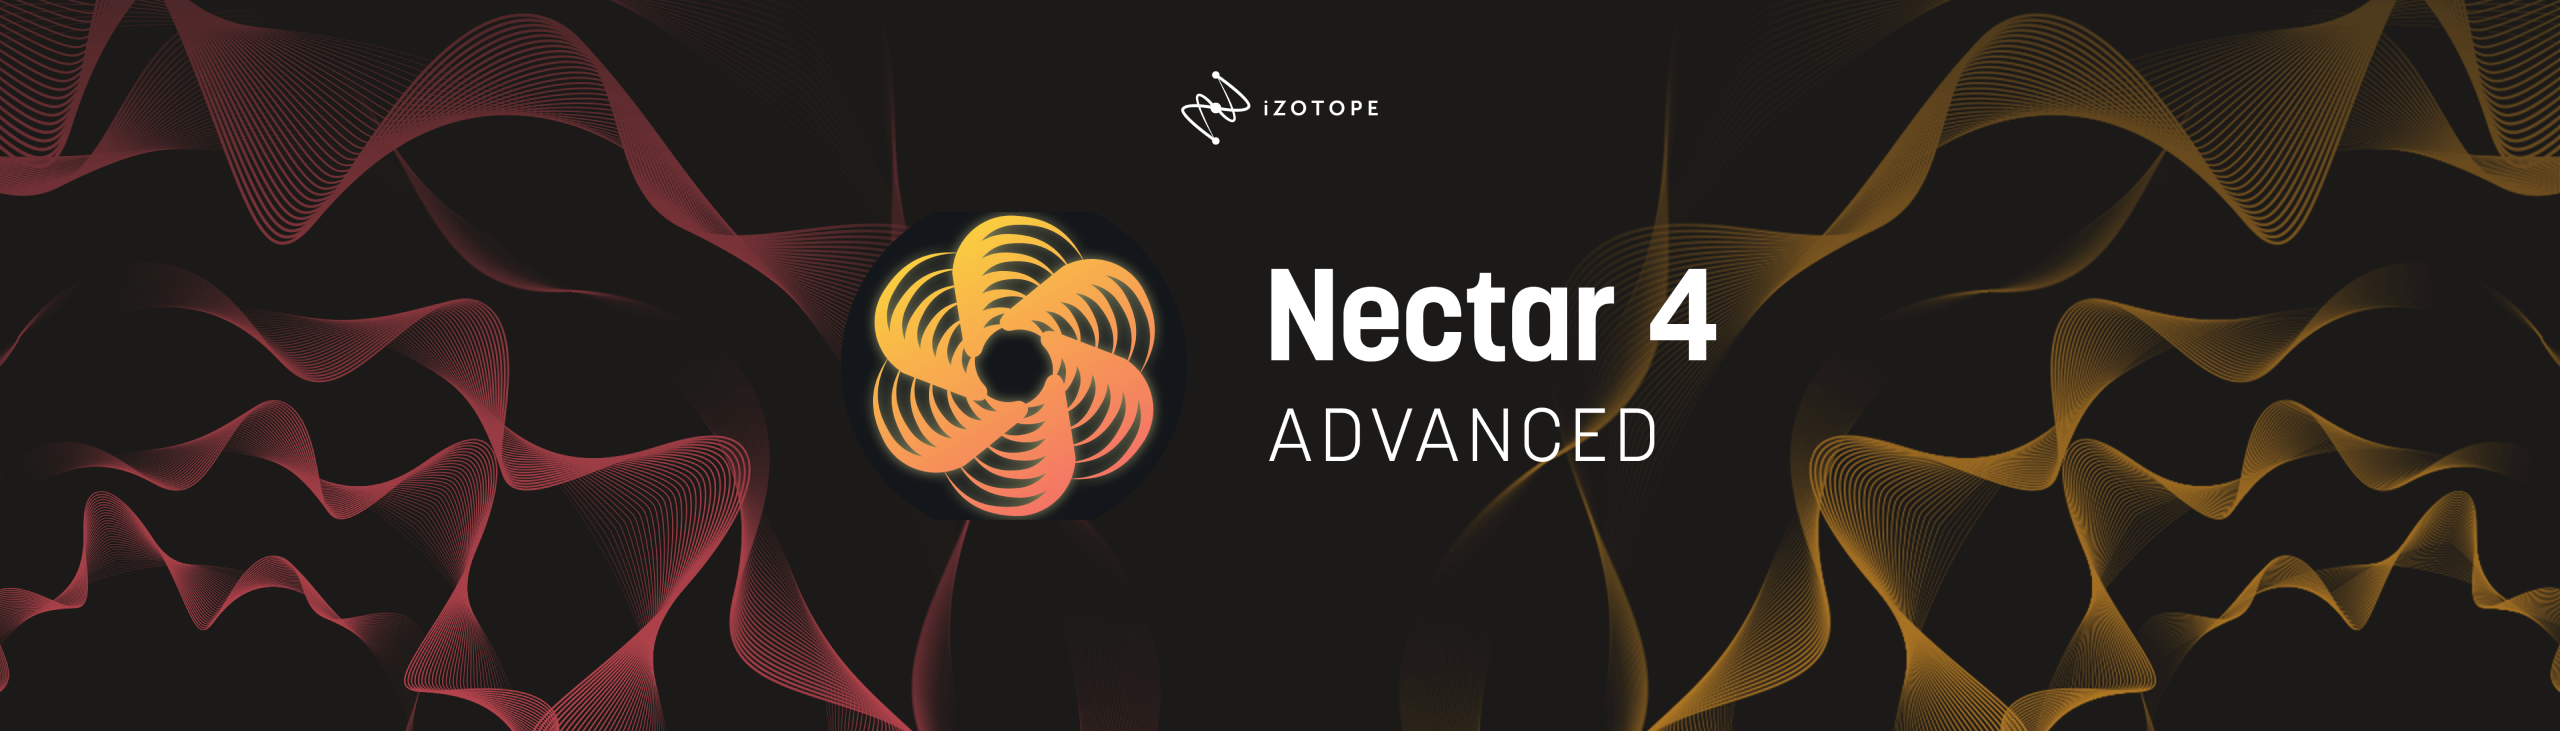 iZotope Nectar 4 Advanced